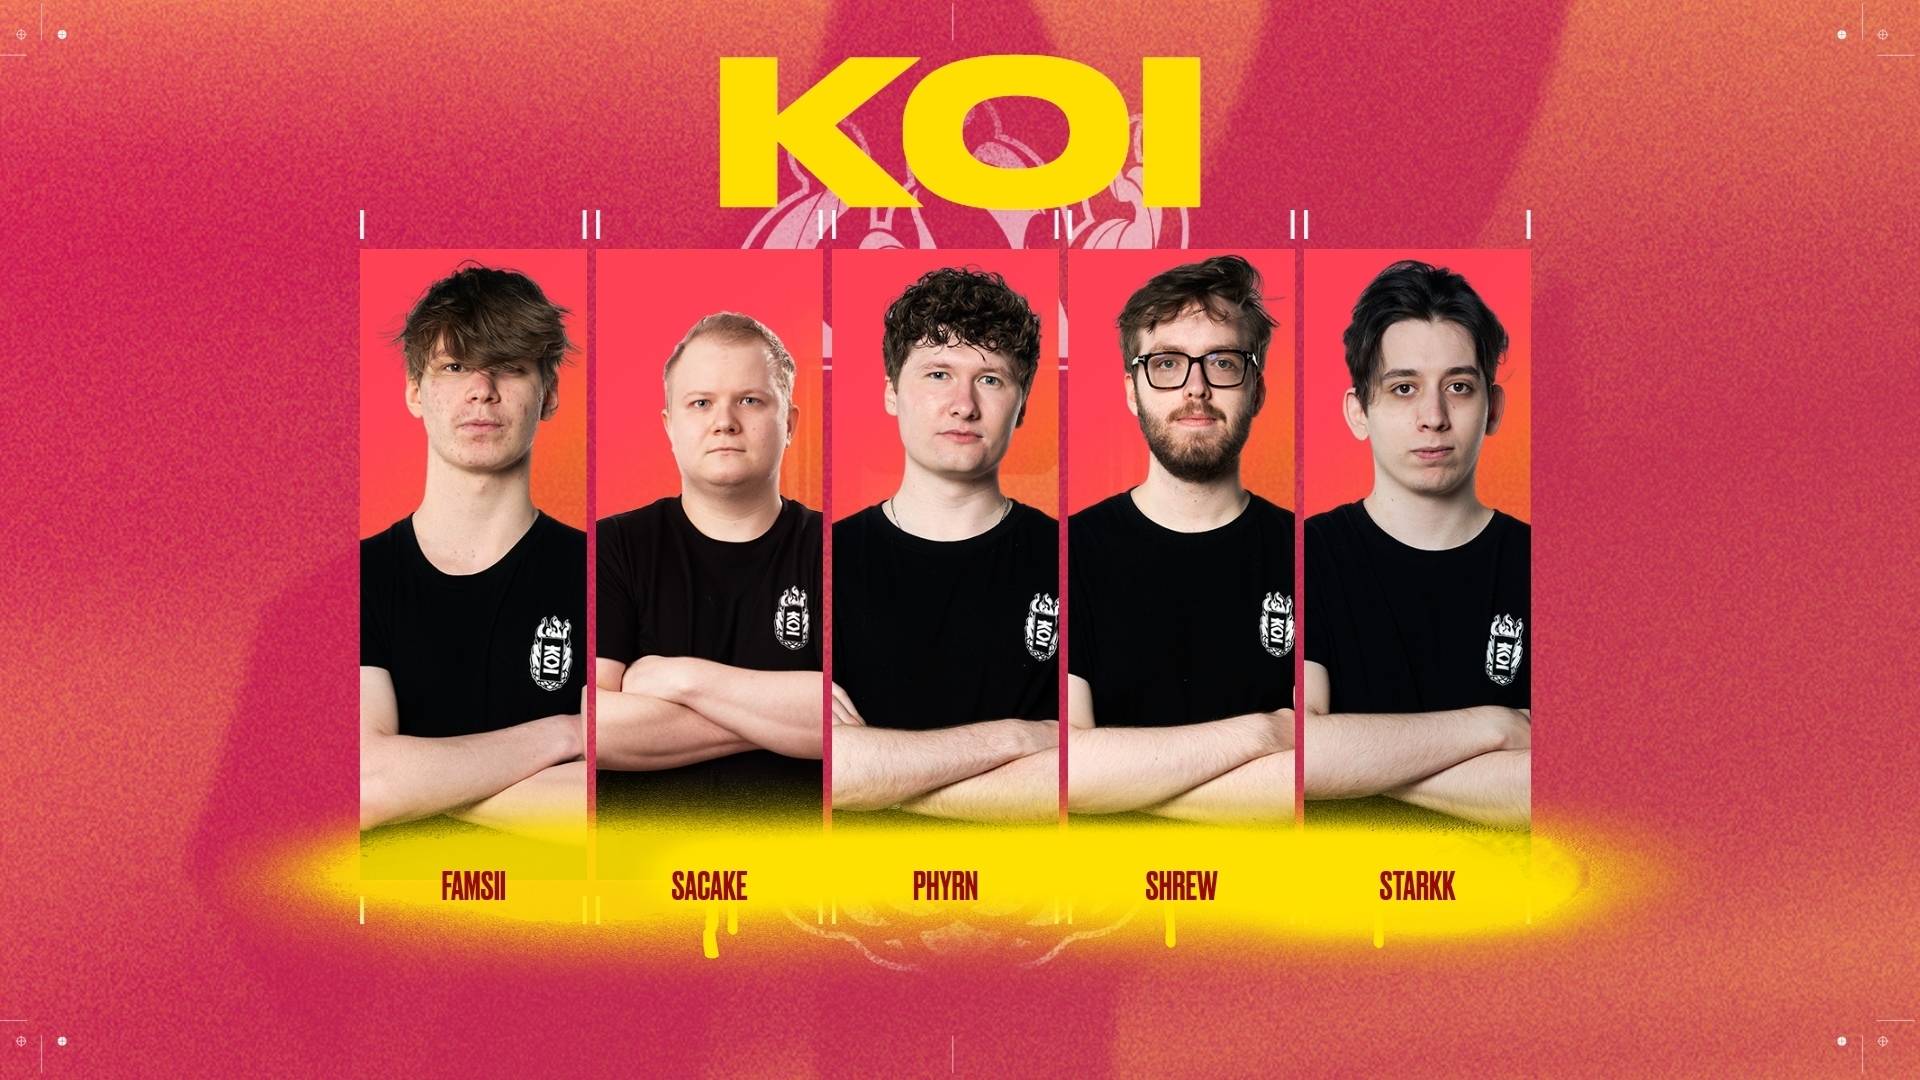 Valorant – Big Roster Changes for Teams KOI & Evil Geniuses